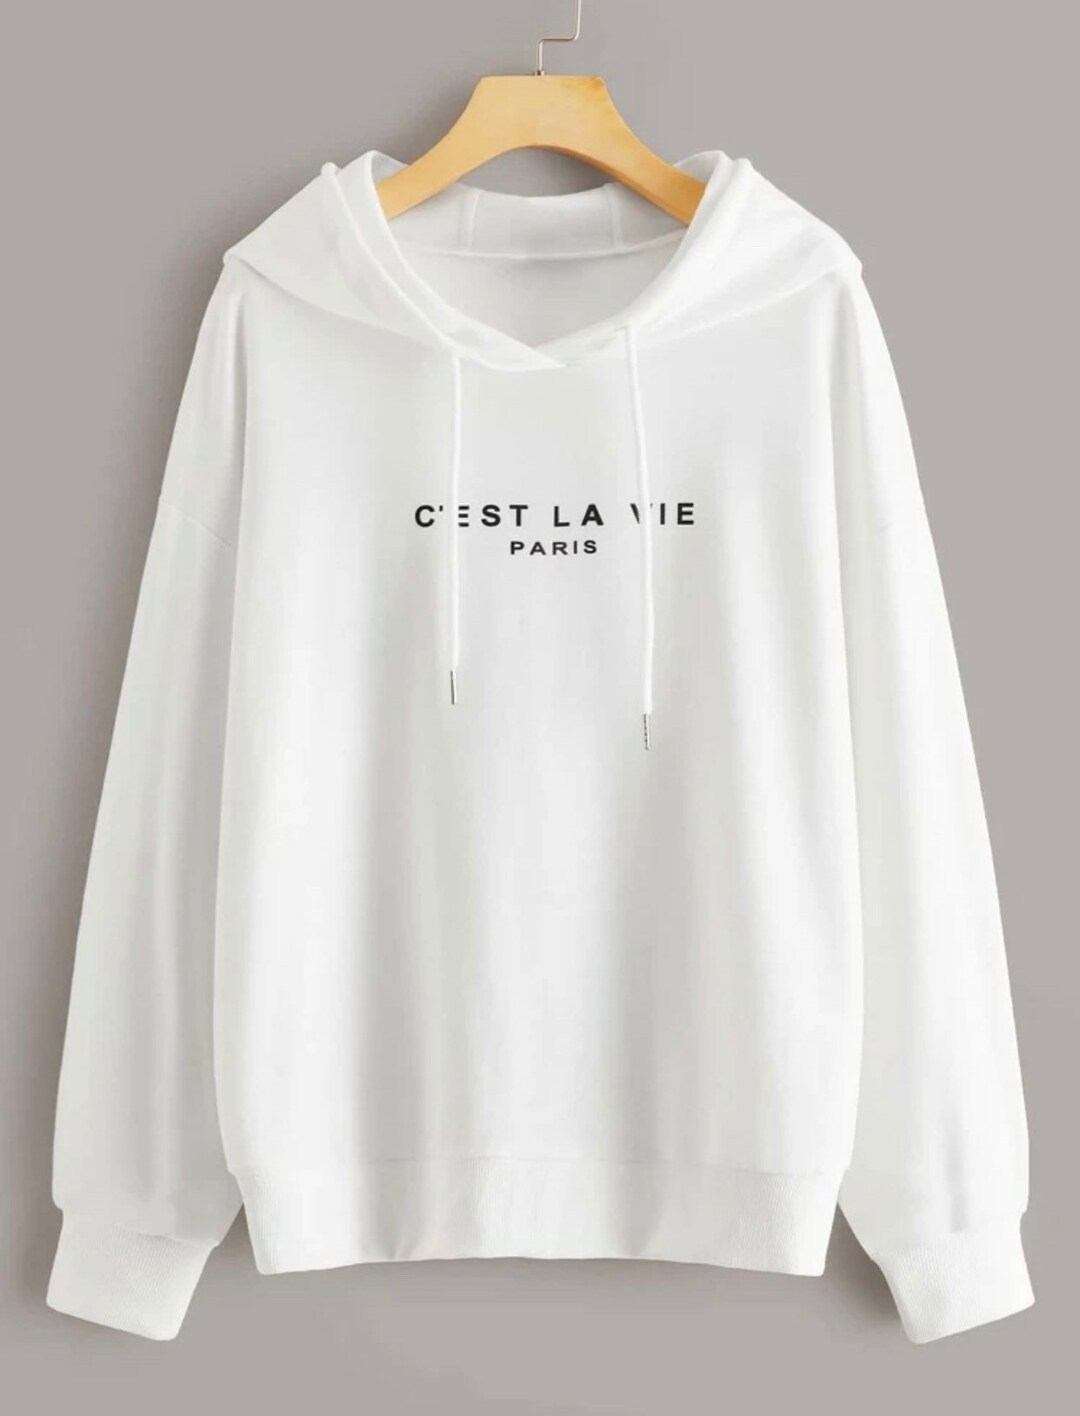 New Sweatshirt Cest La Vie Paris Clothing Long Sleeve - Etsy